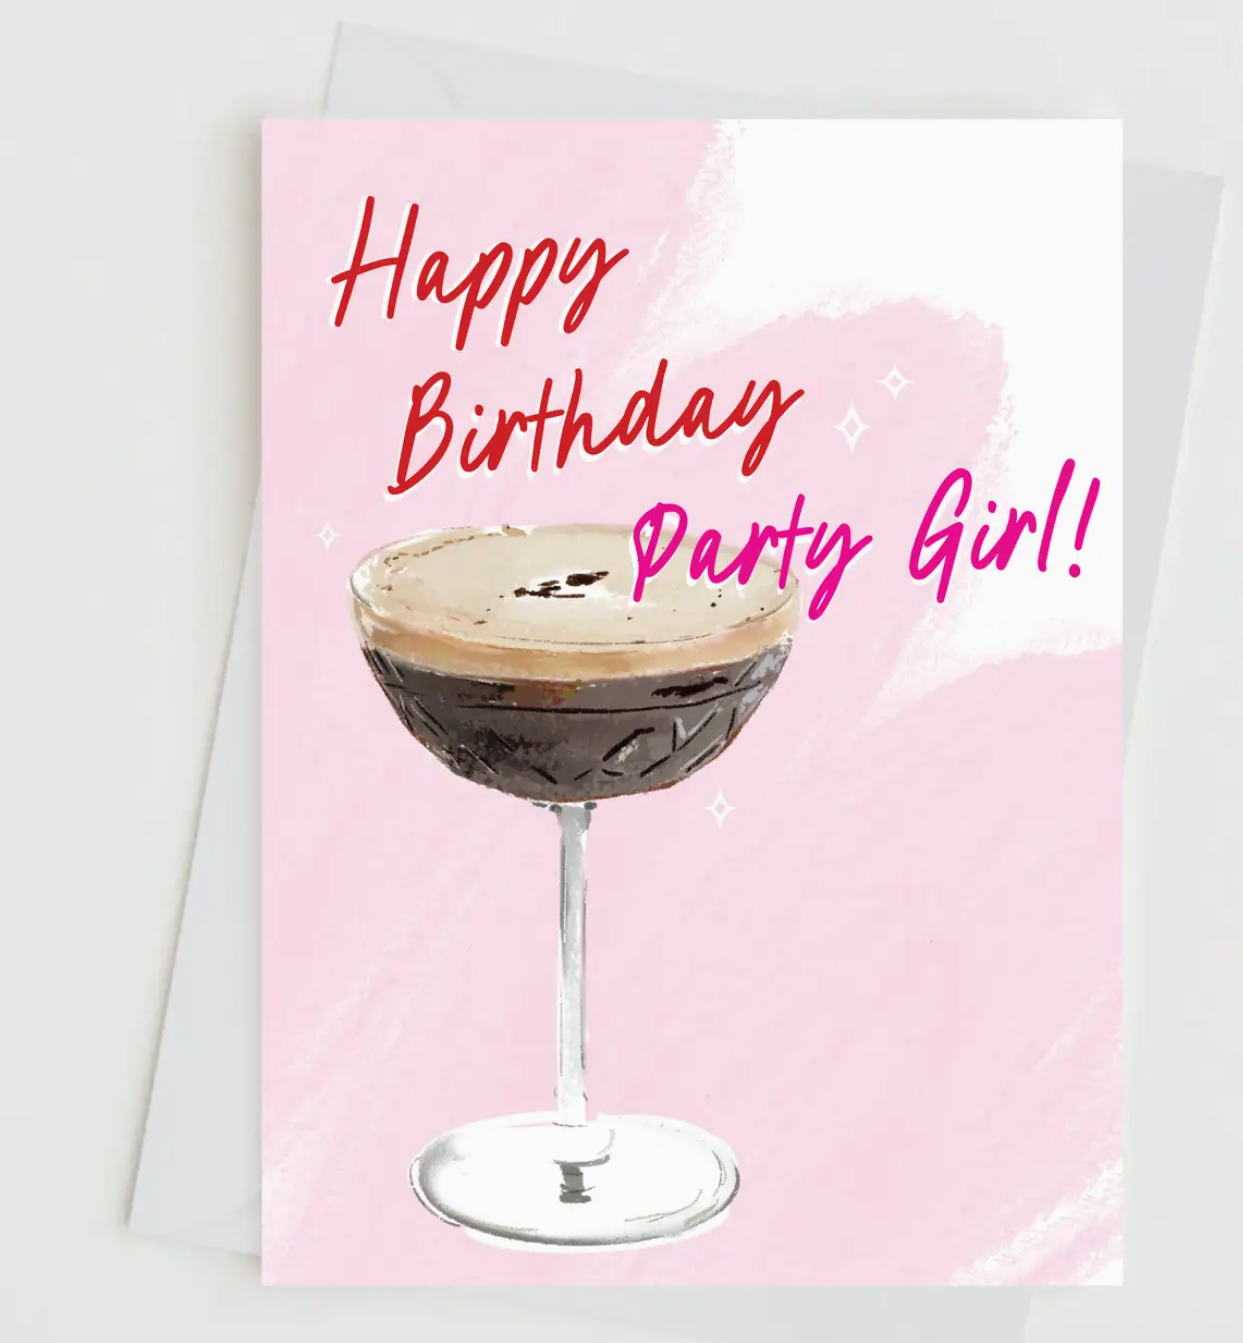 Happy Birthday Party Girl Card